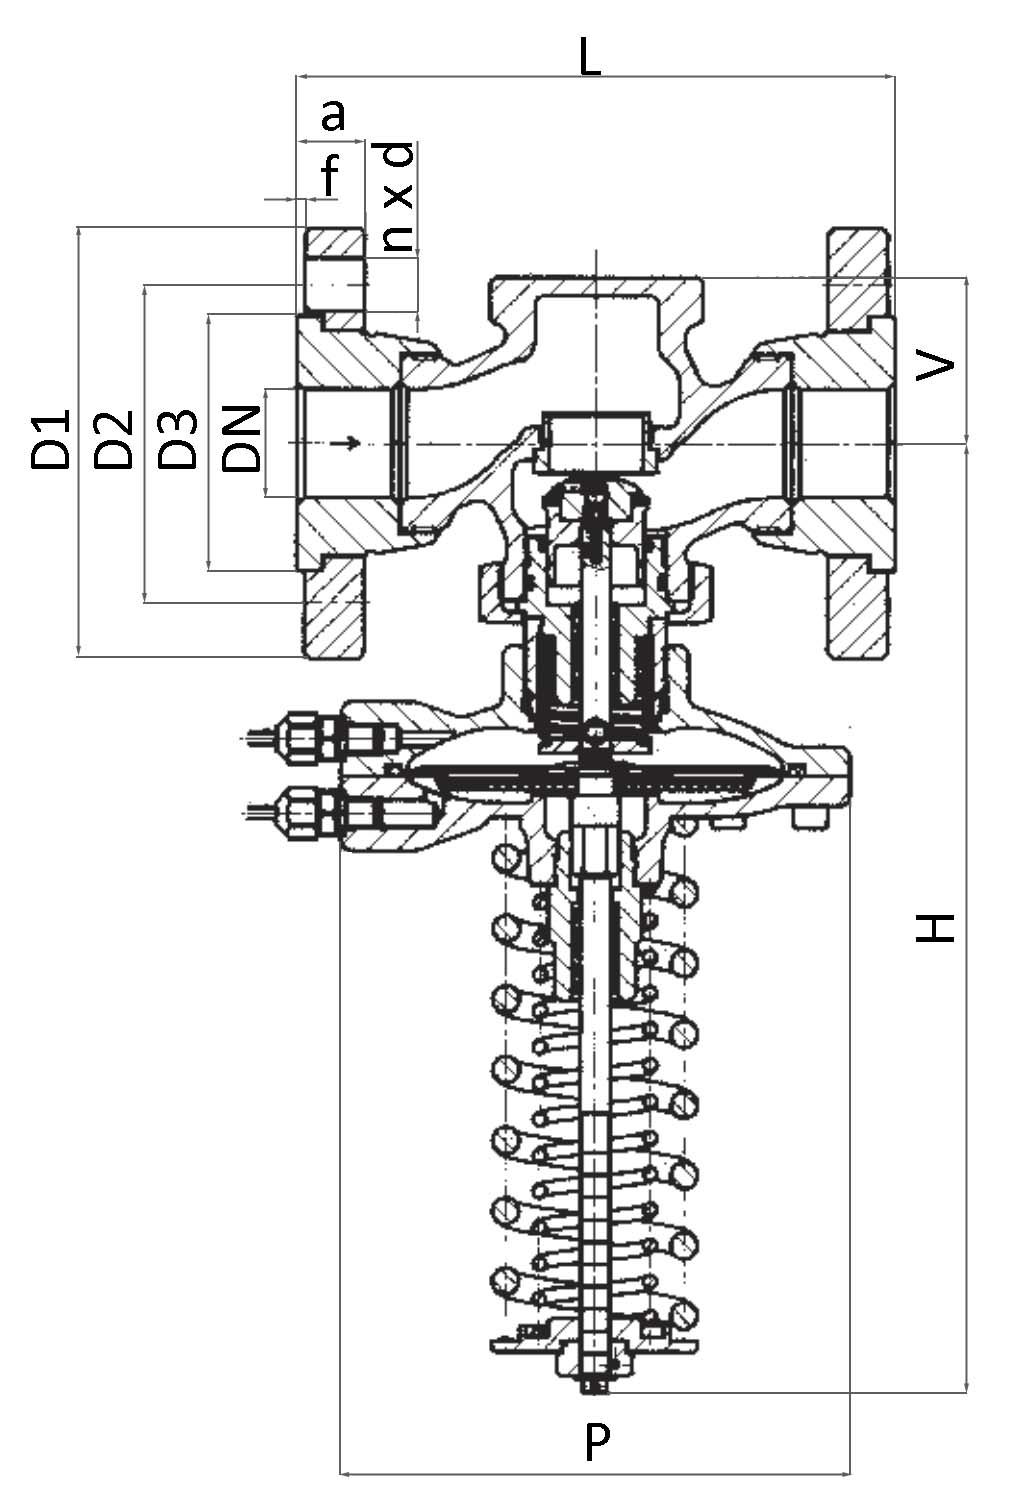 Регулятор перепада давления LDM RD122D Ду50 Ру25 Kvs32 прямого действия, корпус - чугун, фланцевый, Tmax до 150°С, диапазон настройки 23 (40-220 кПа)